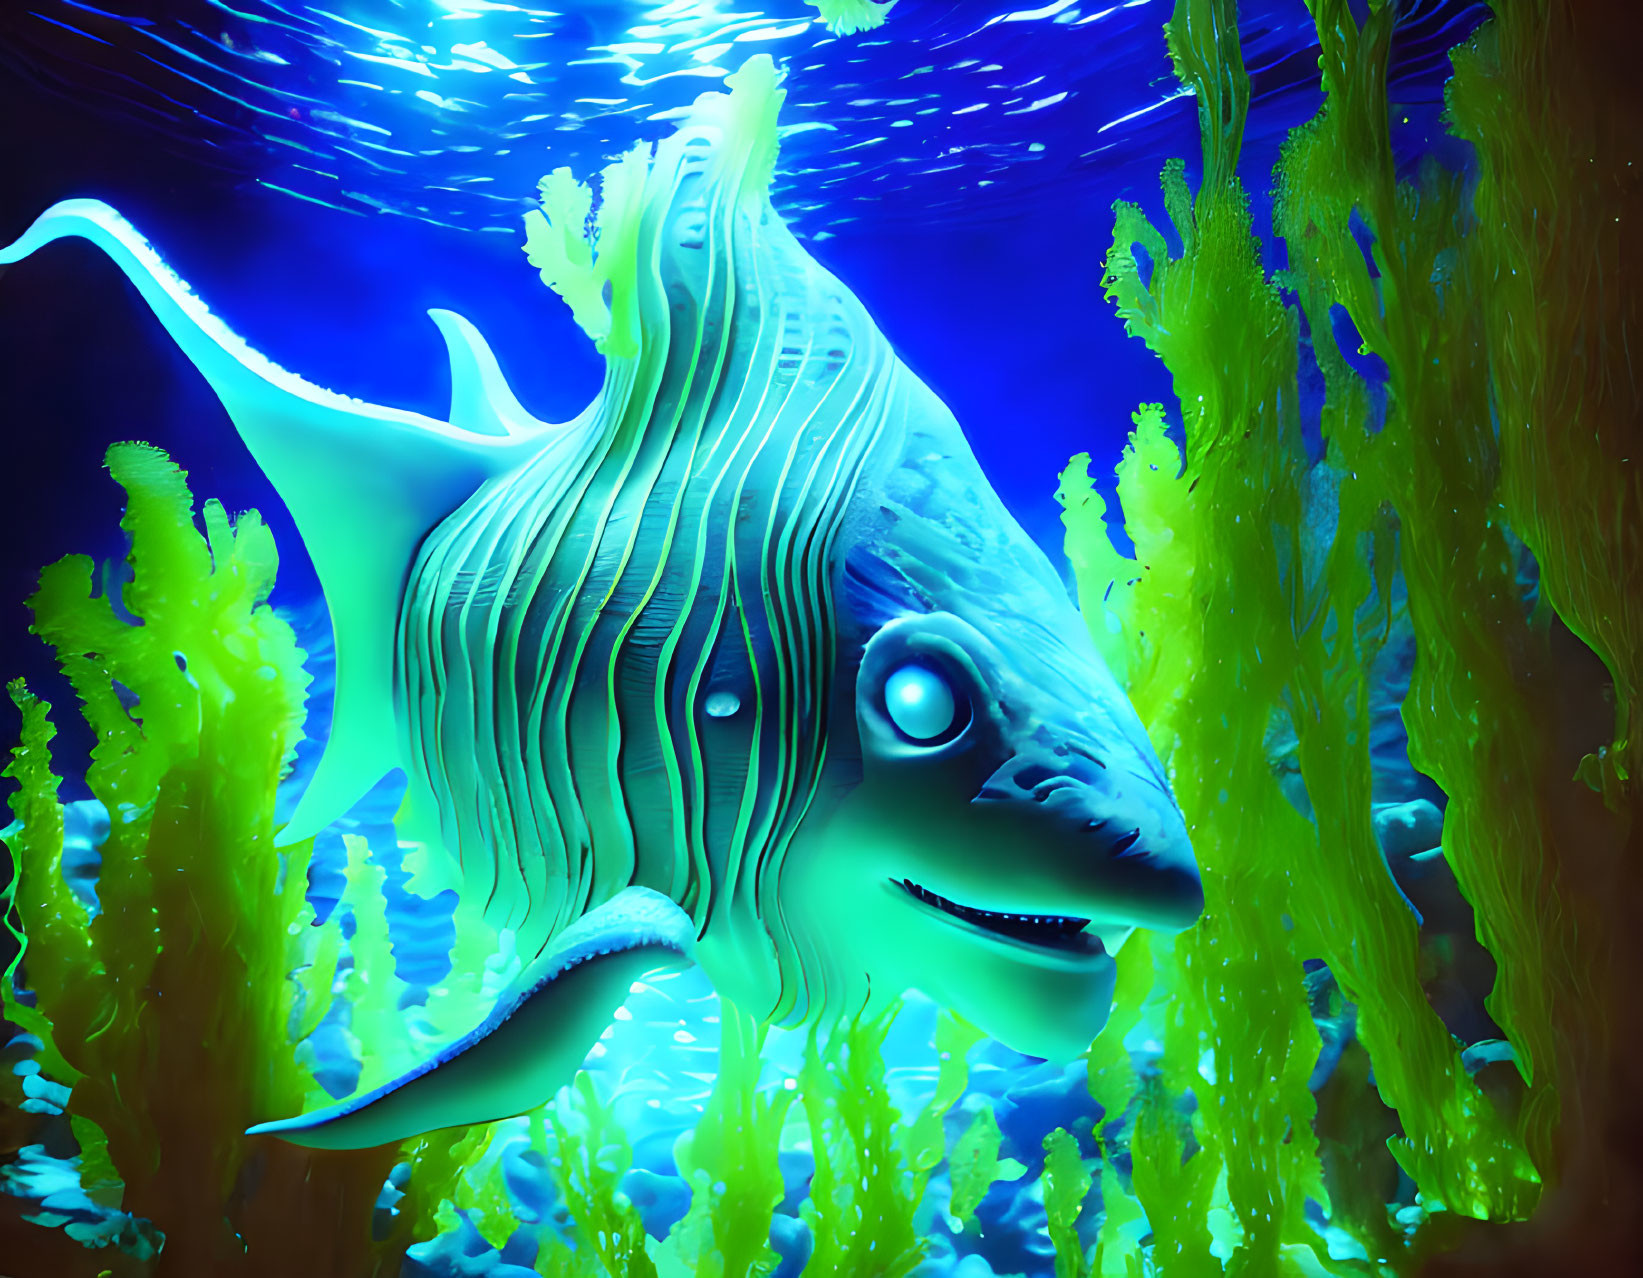 Whimsical fish swimming in vibrant underwater scene